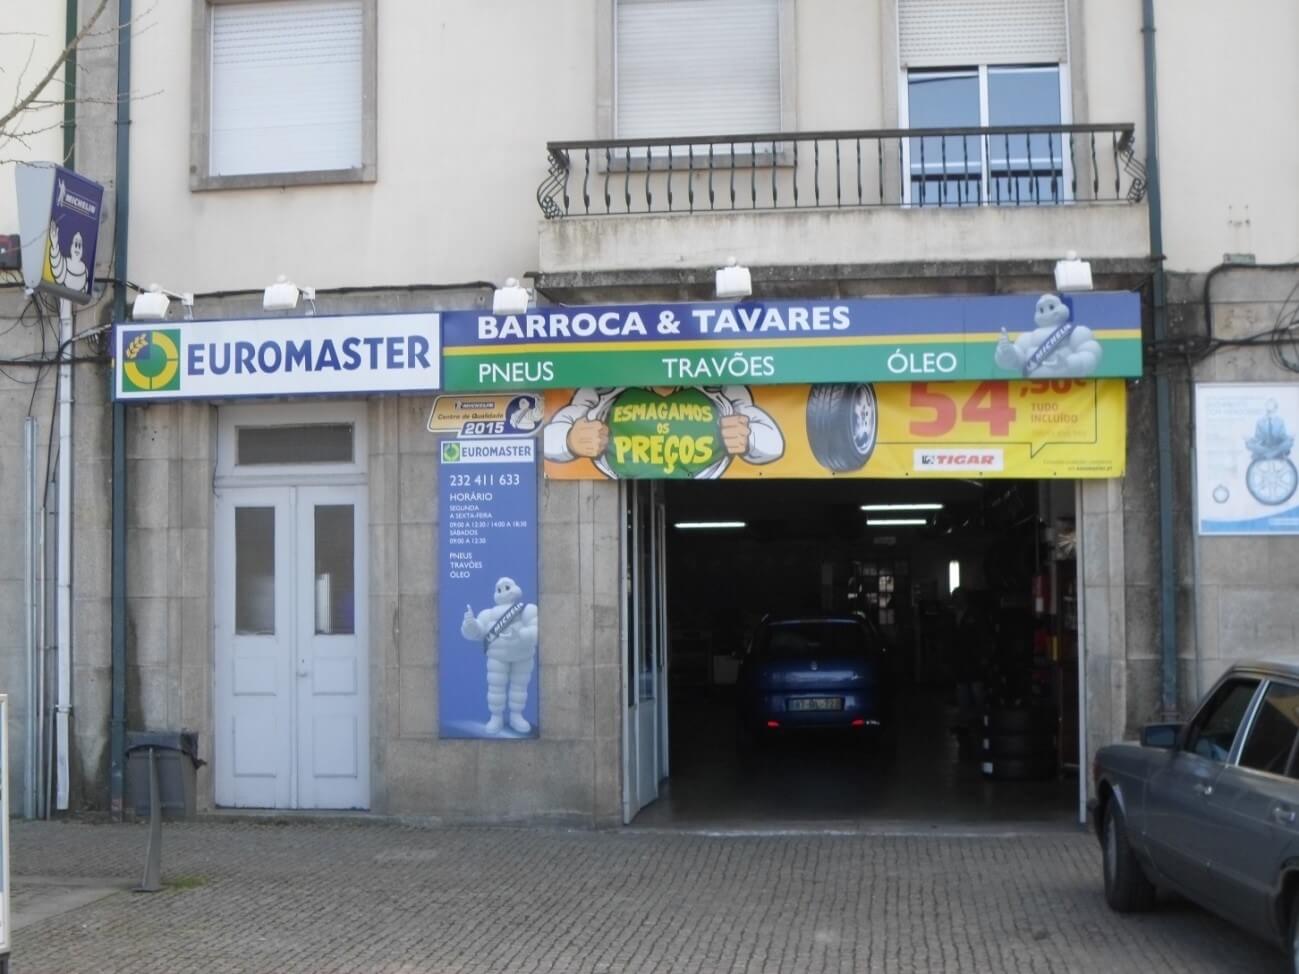 Images Euromaster Barroca & Tavares